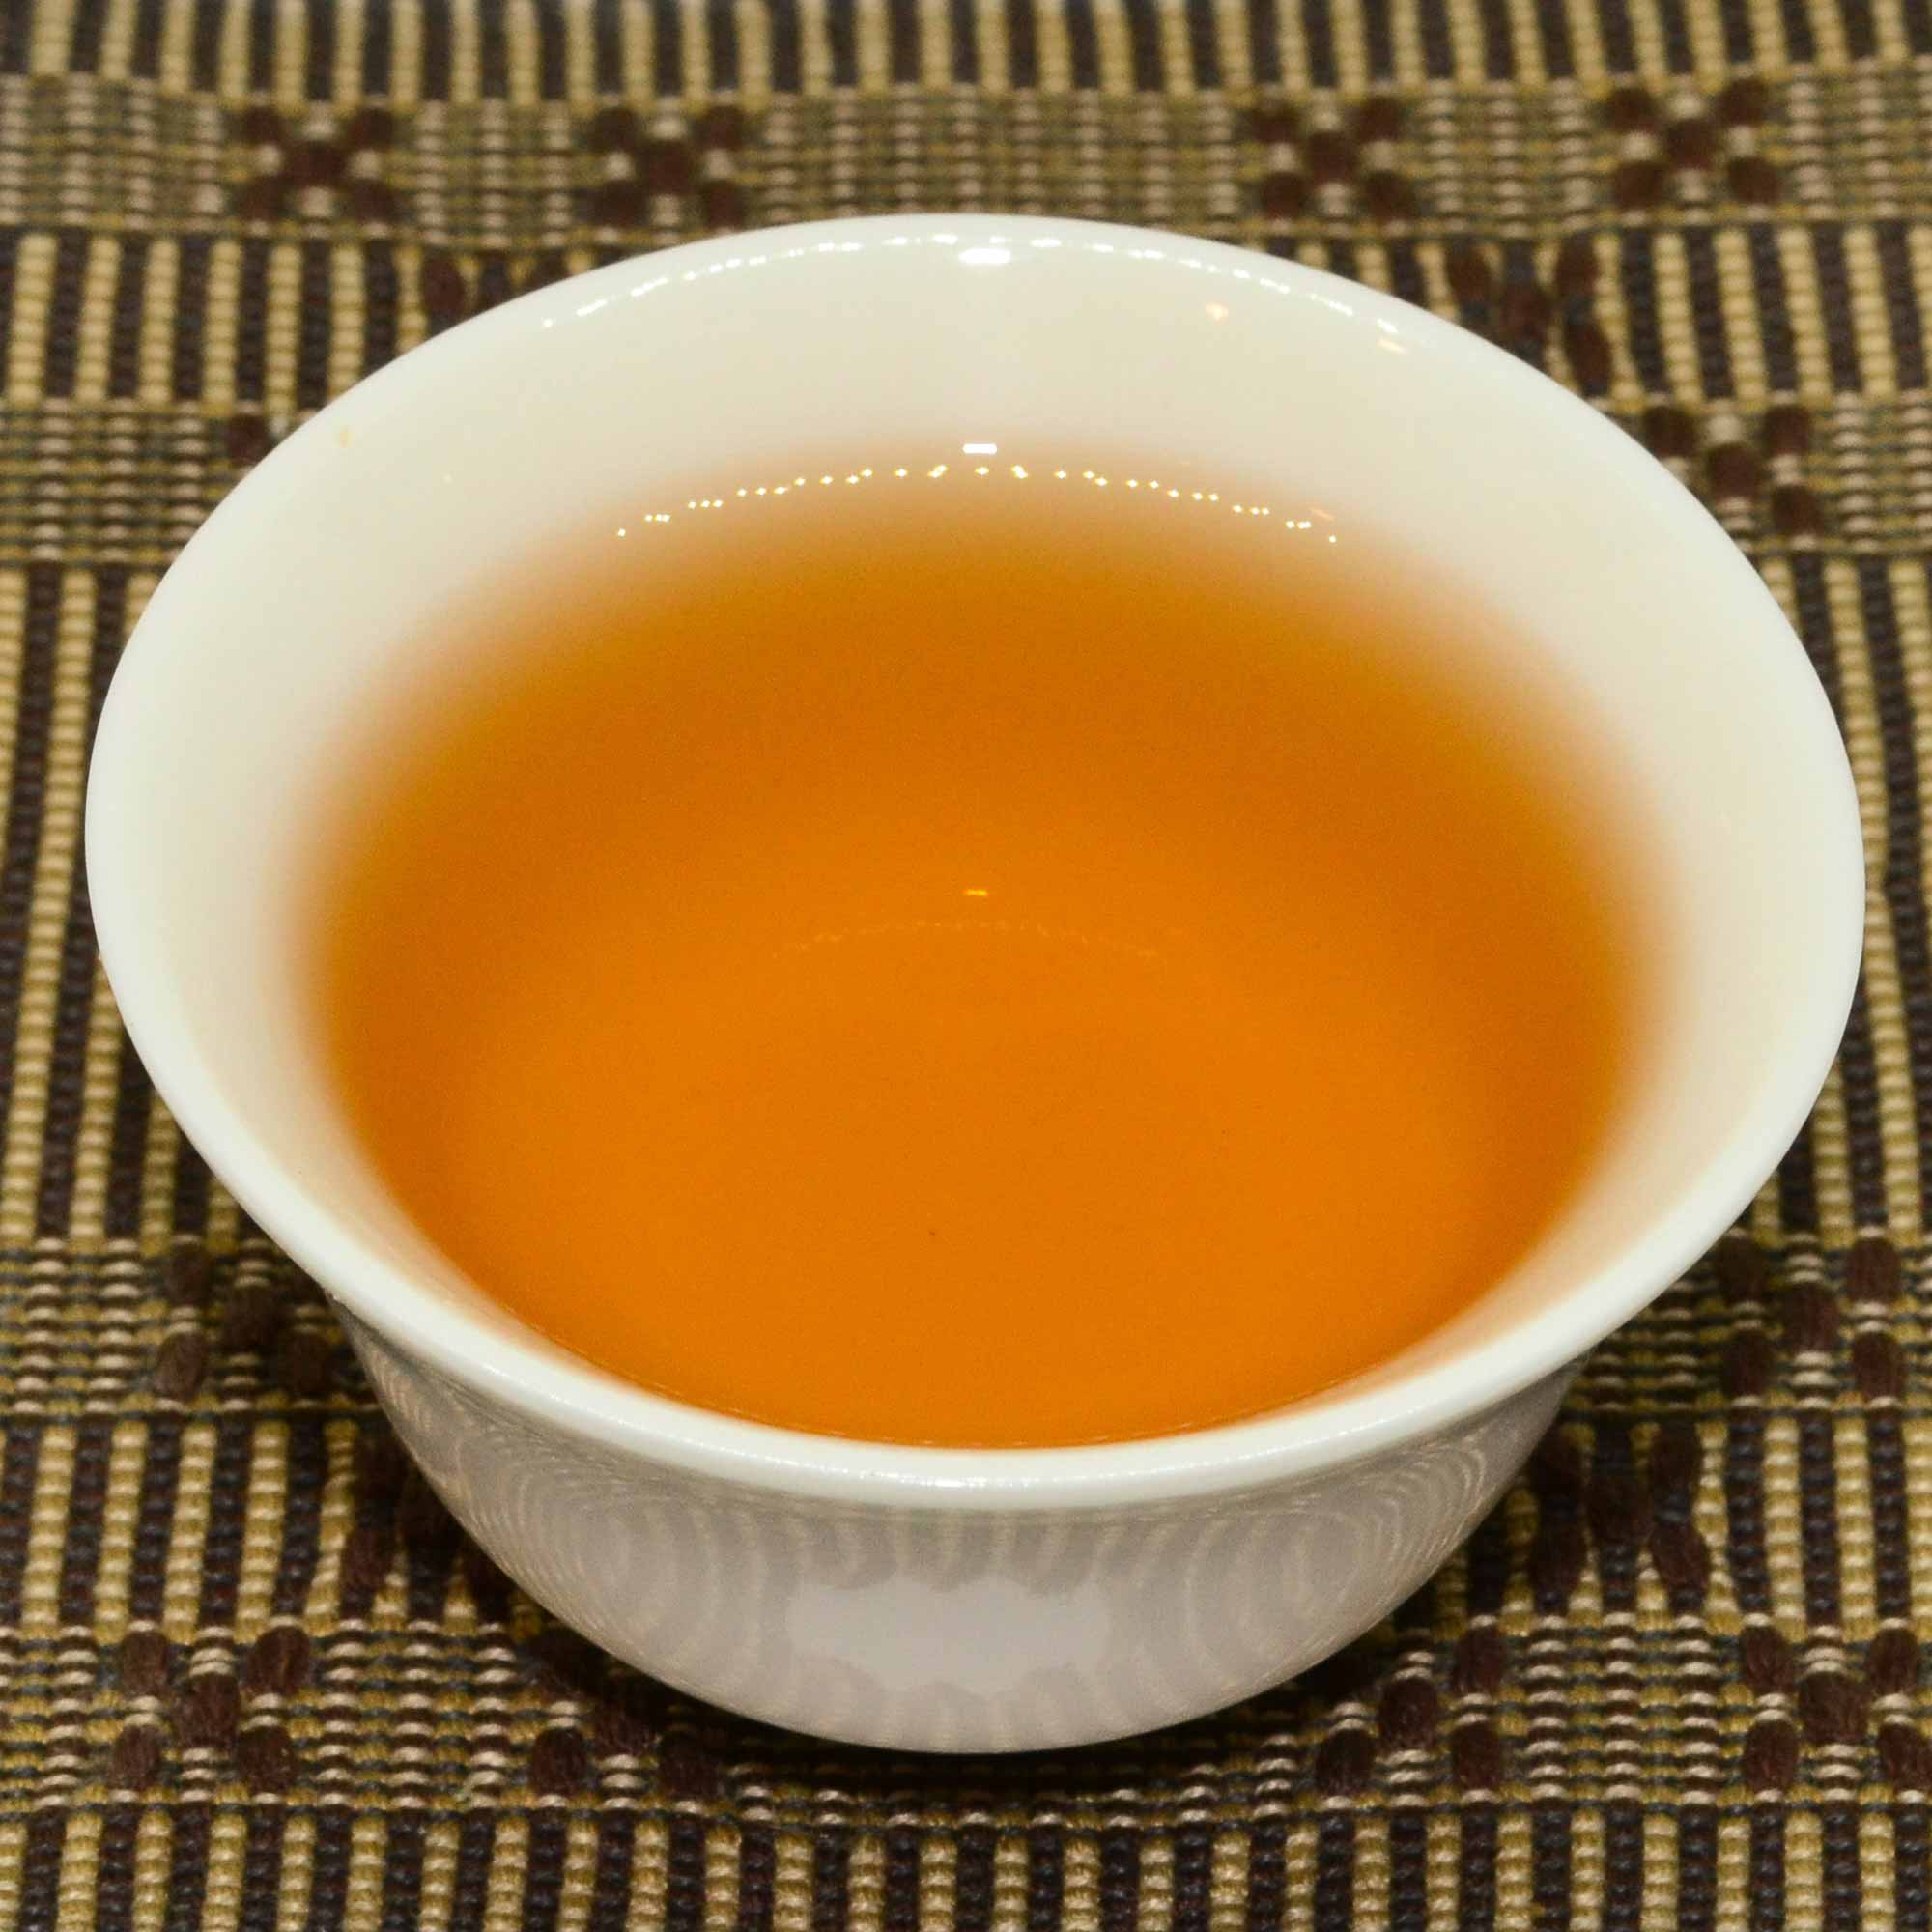 Alishan High Mountain Oolong Tea from Taiwan